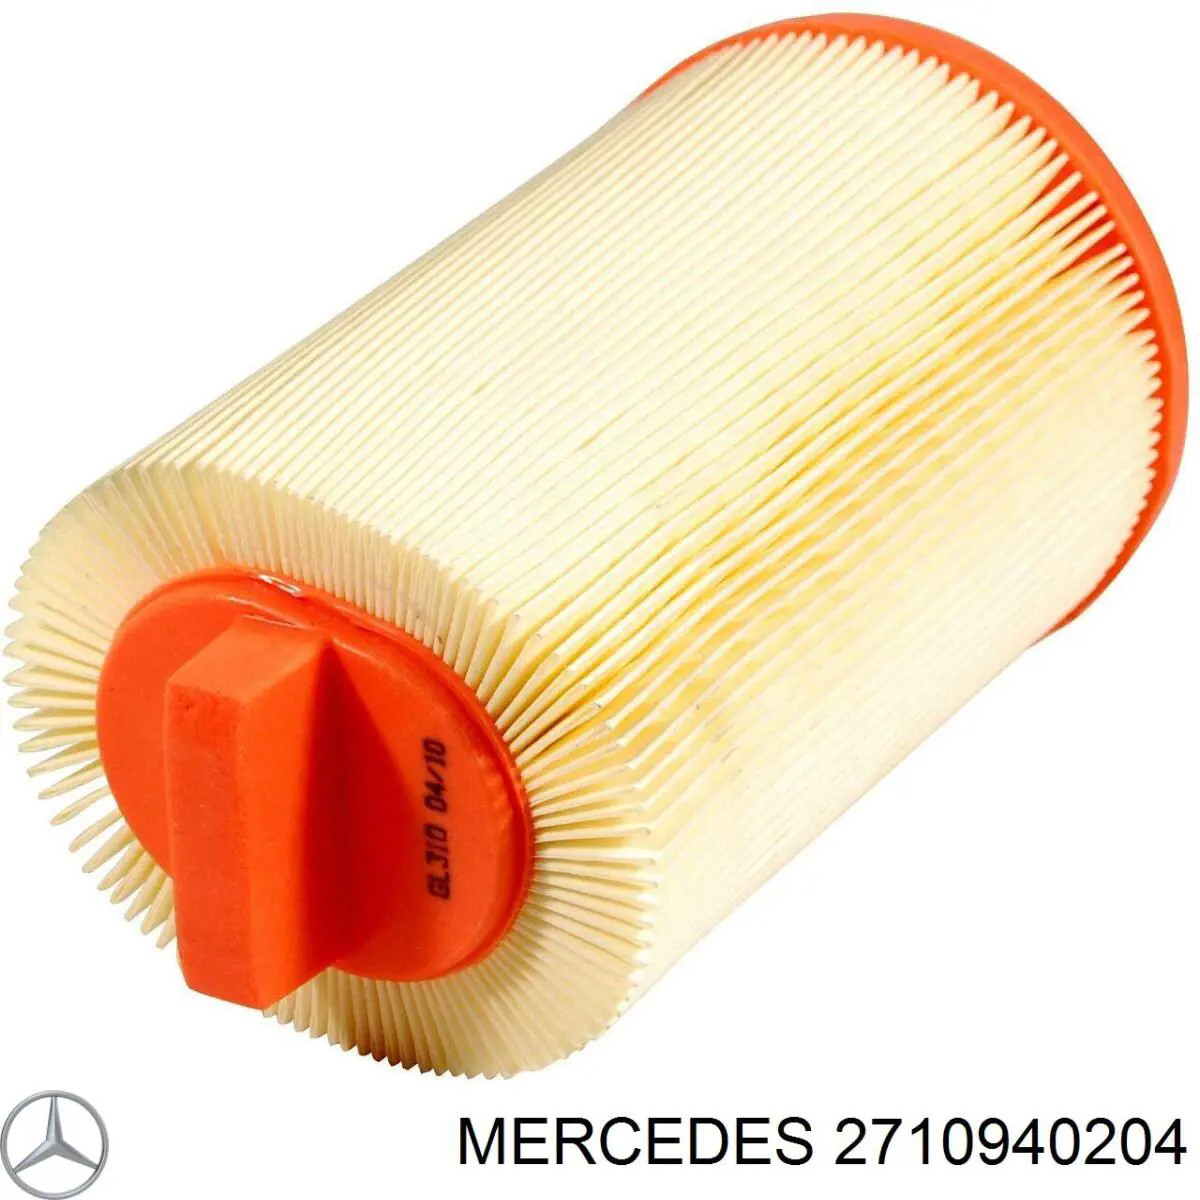 2710940204 Mercedes filtro de aire